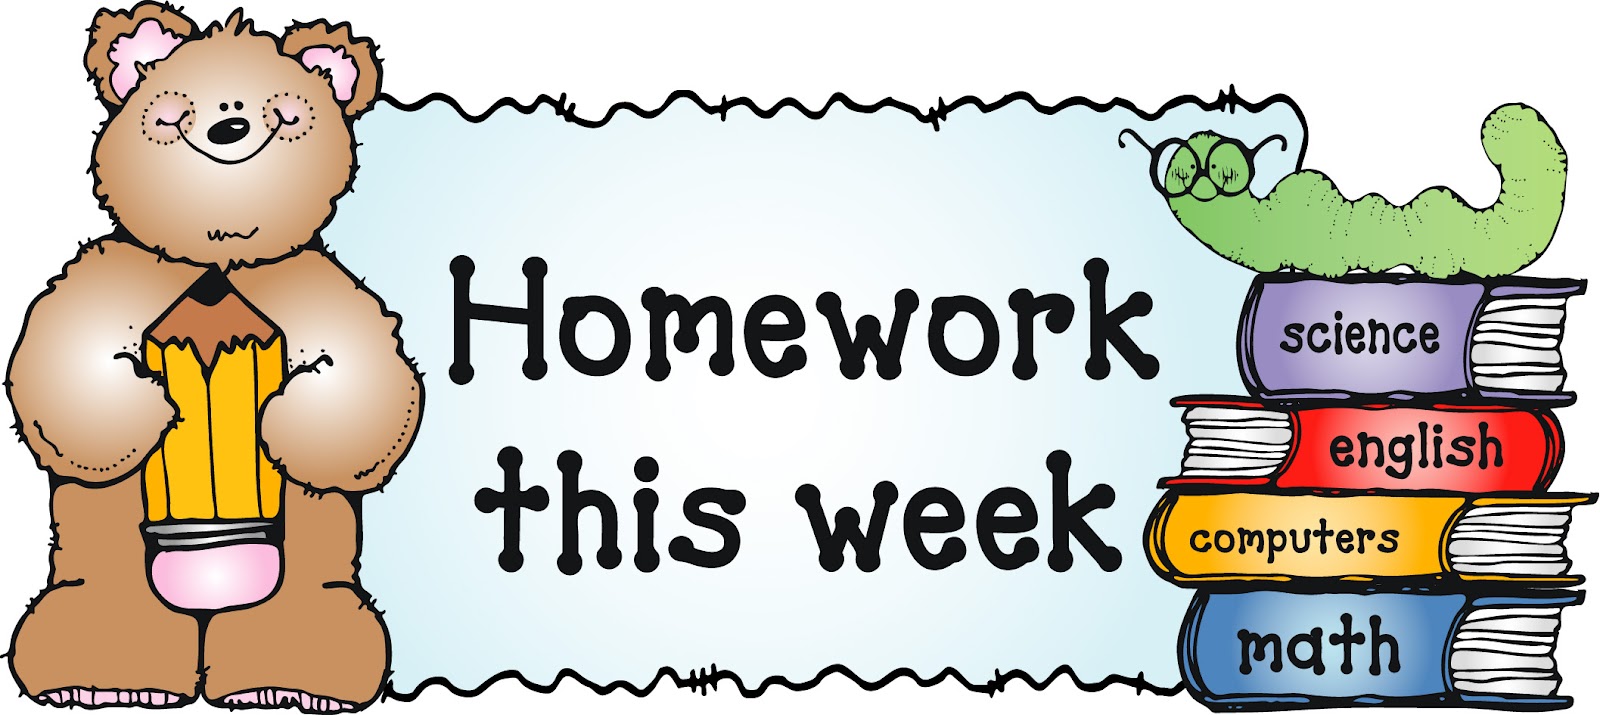 Homework clipart border Introducere Homework Clip Art For Kids Clipart Library